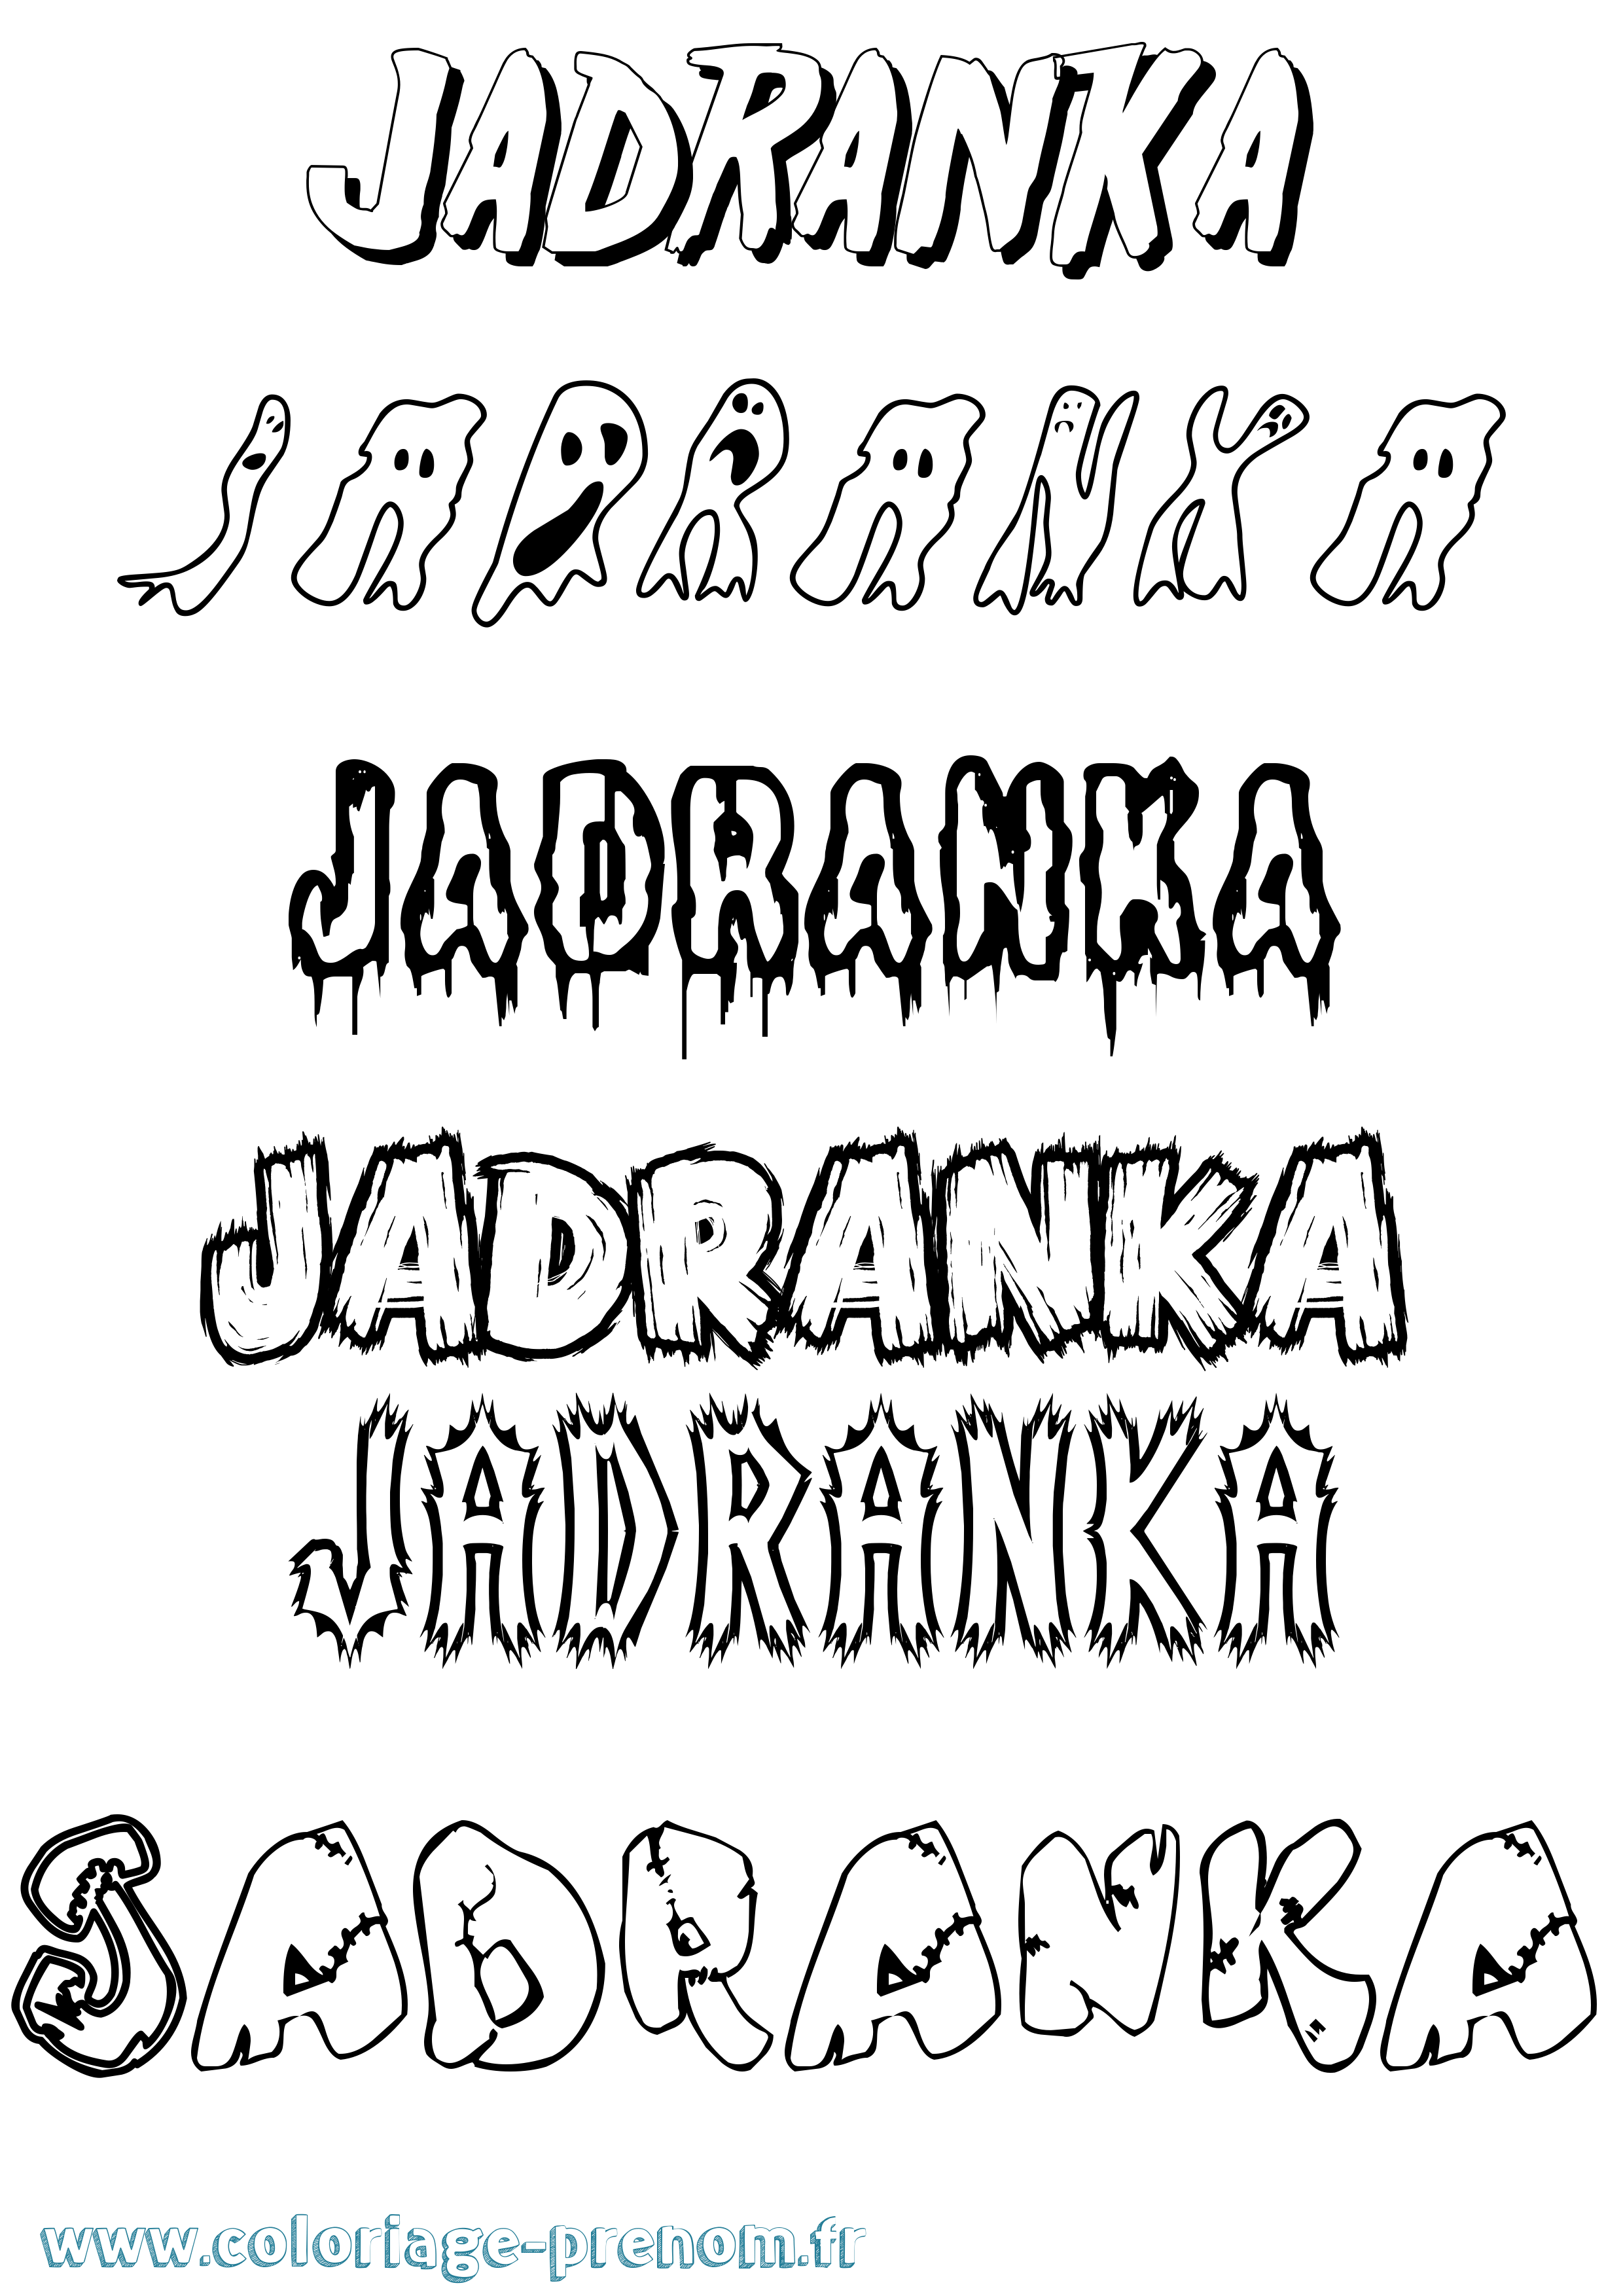 Coloriage prénom Jadranka Frisson